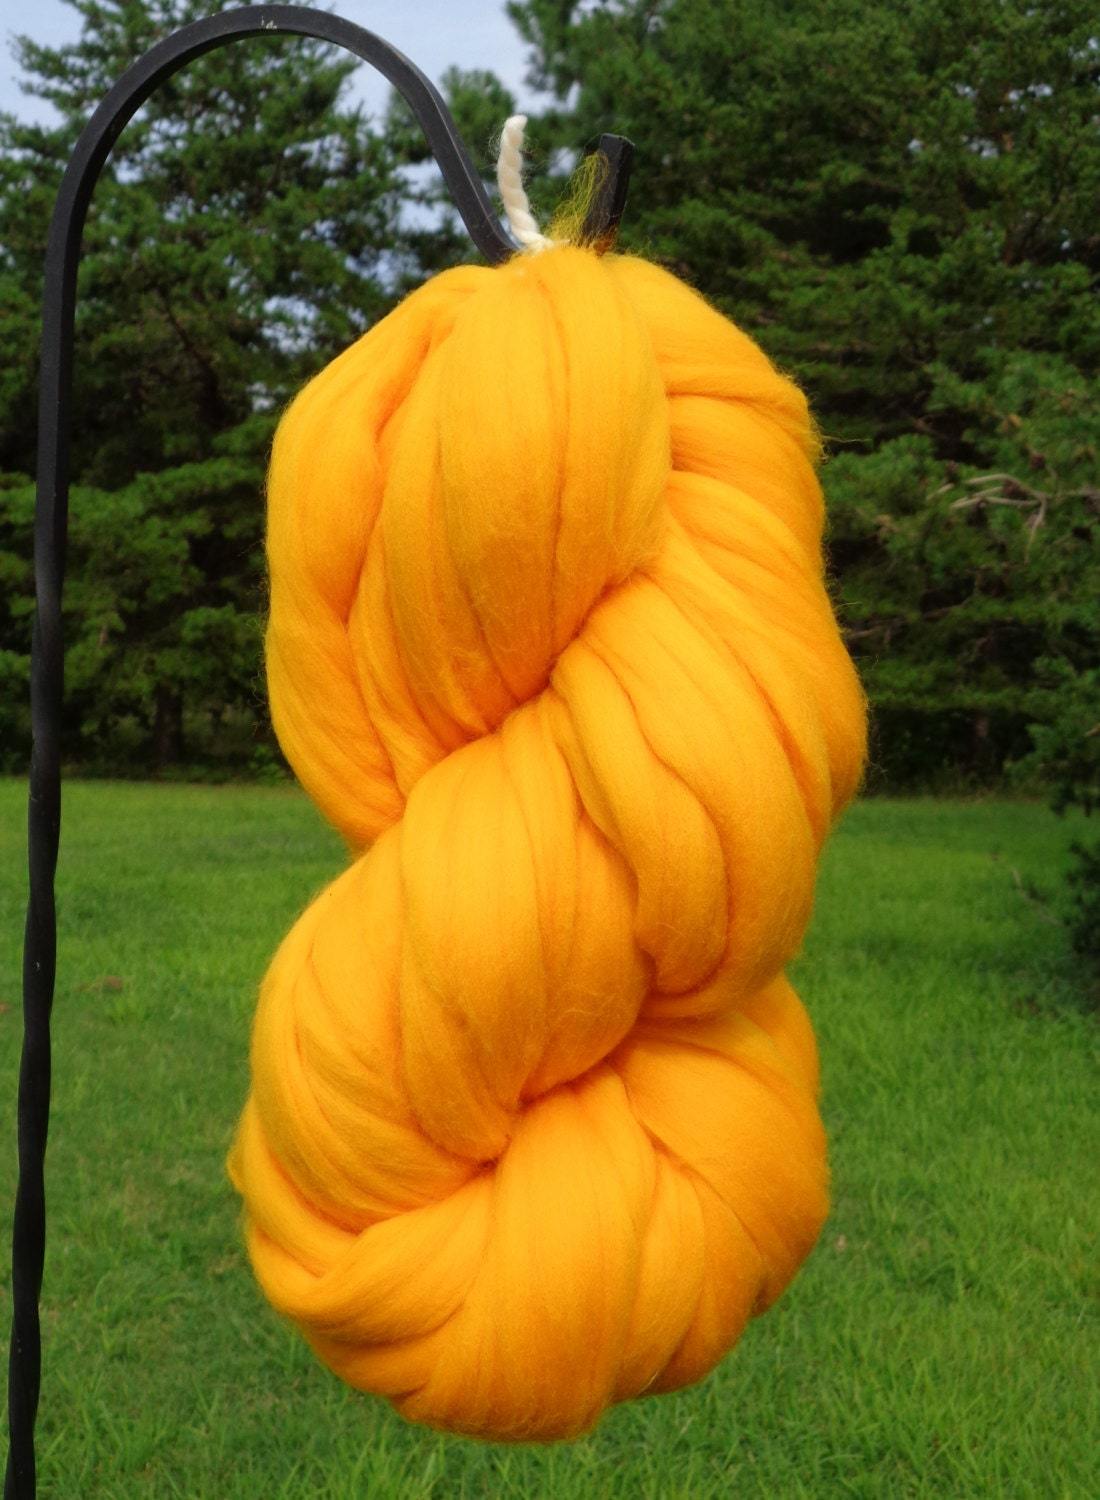 Wool Roving, Golden Yellow Wool Roving, wool top, Merino wool - Spin into Yarn, Needle Felt wet felt all Crafts